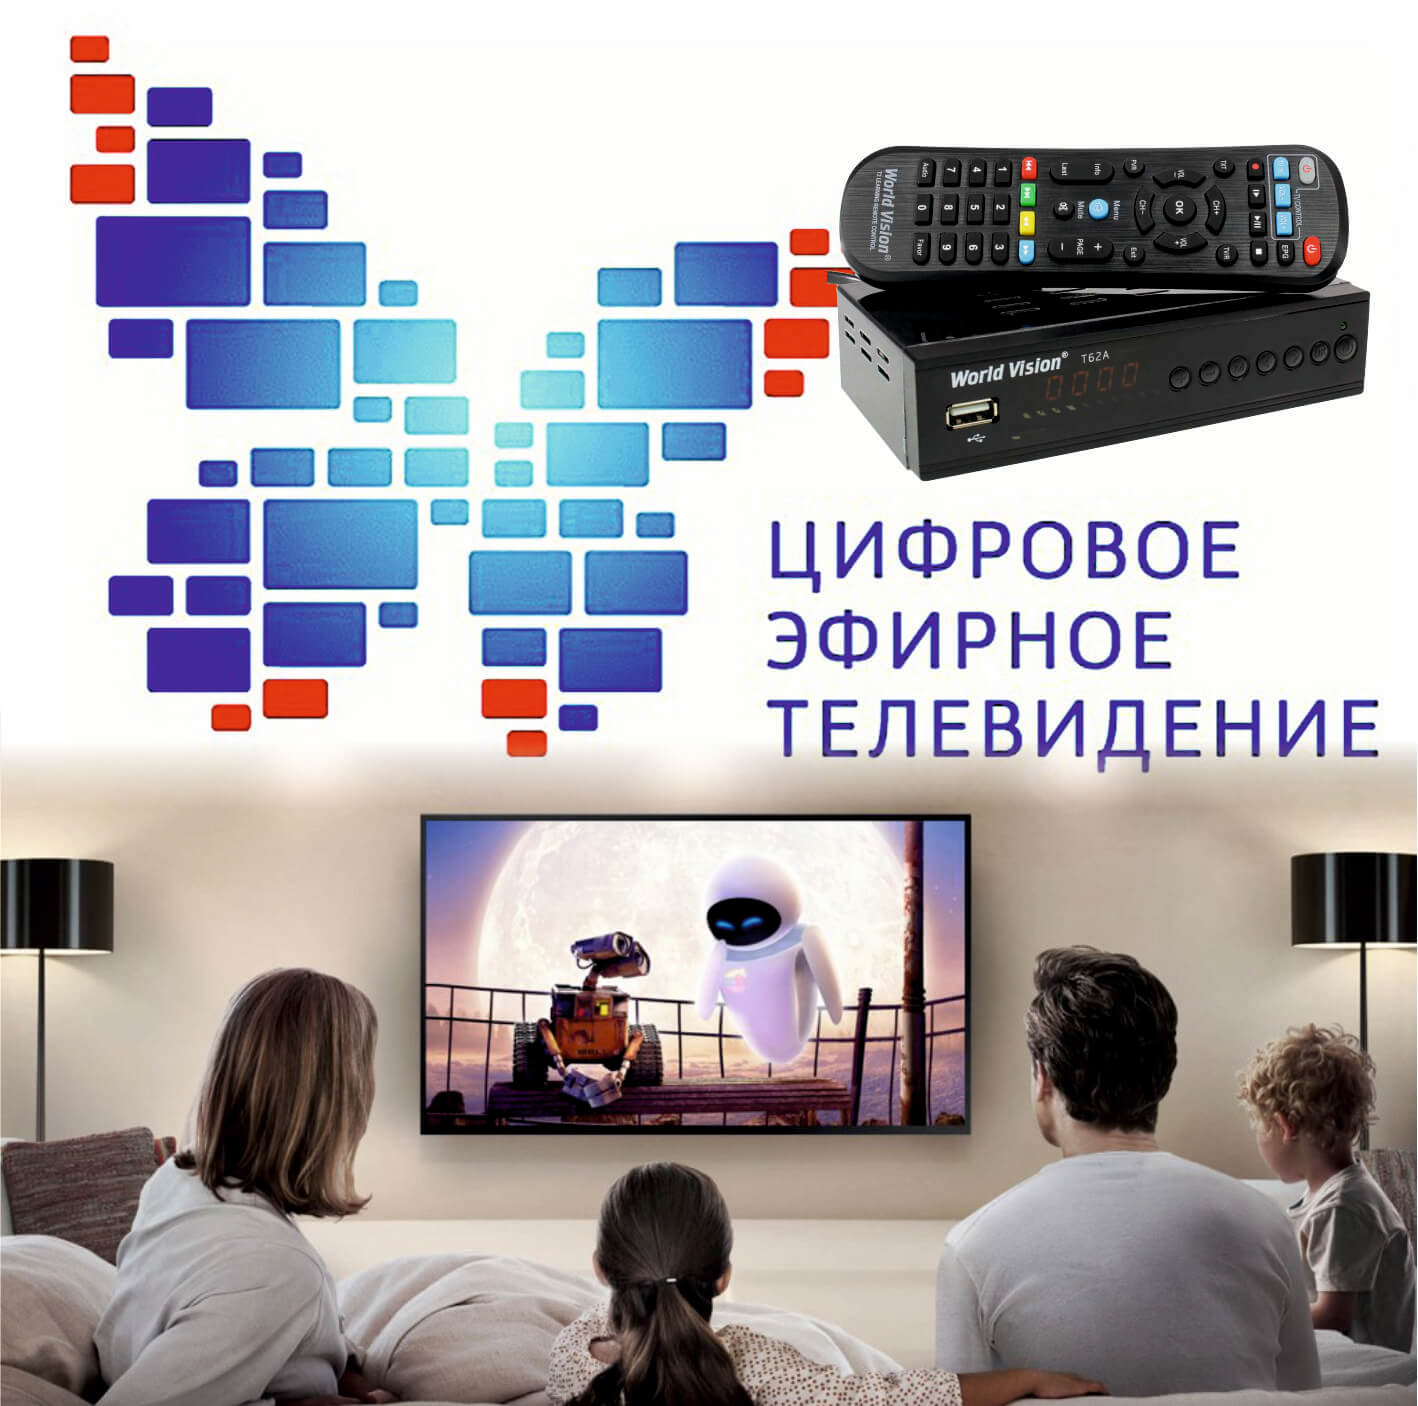 Мини DVB-T2 антенна и легкий ремонт ТВ приставки -=-=-